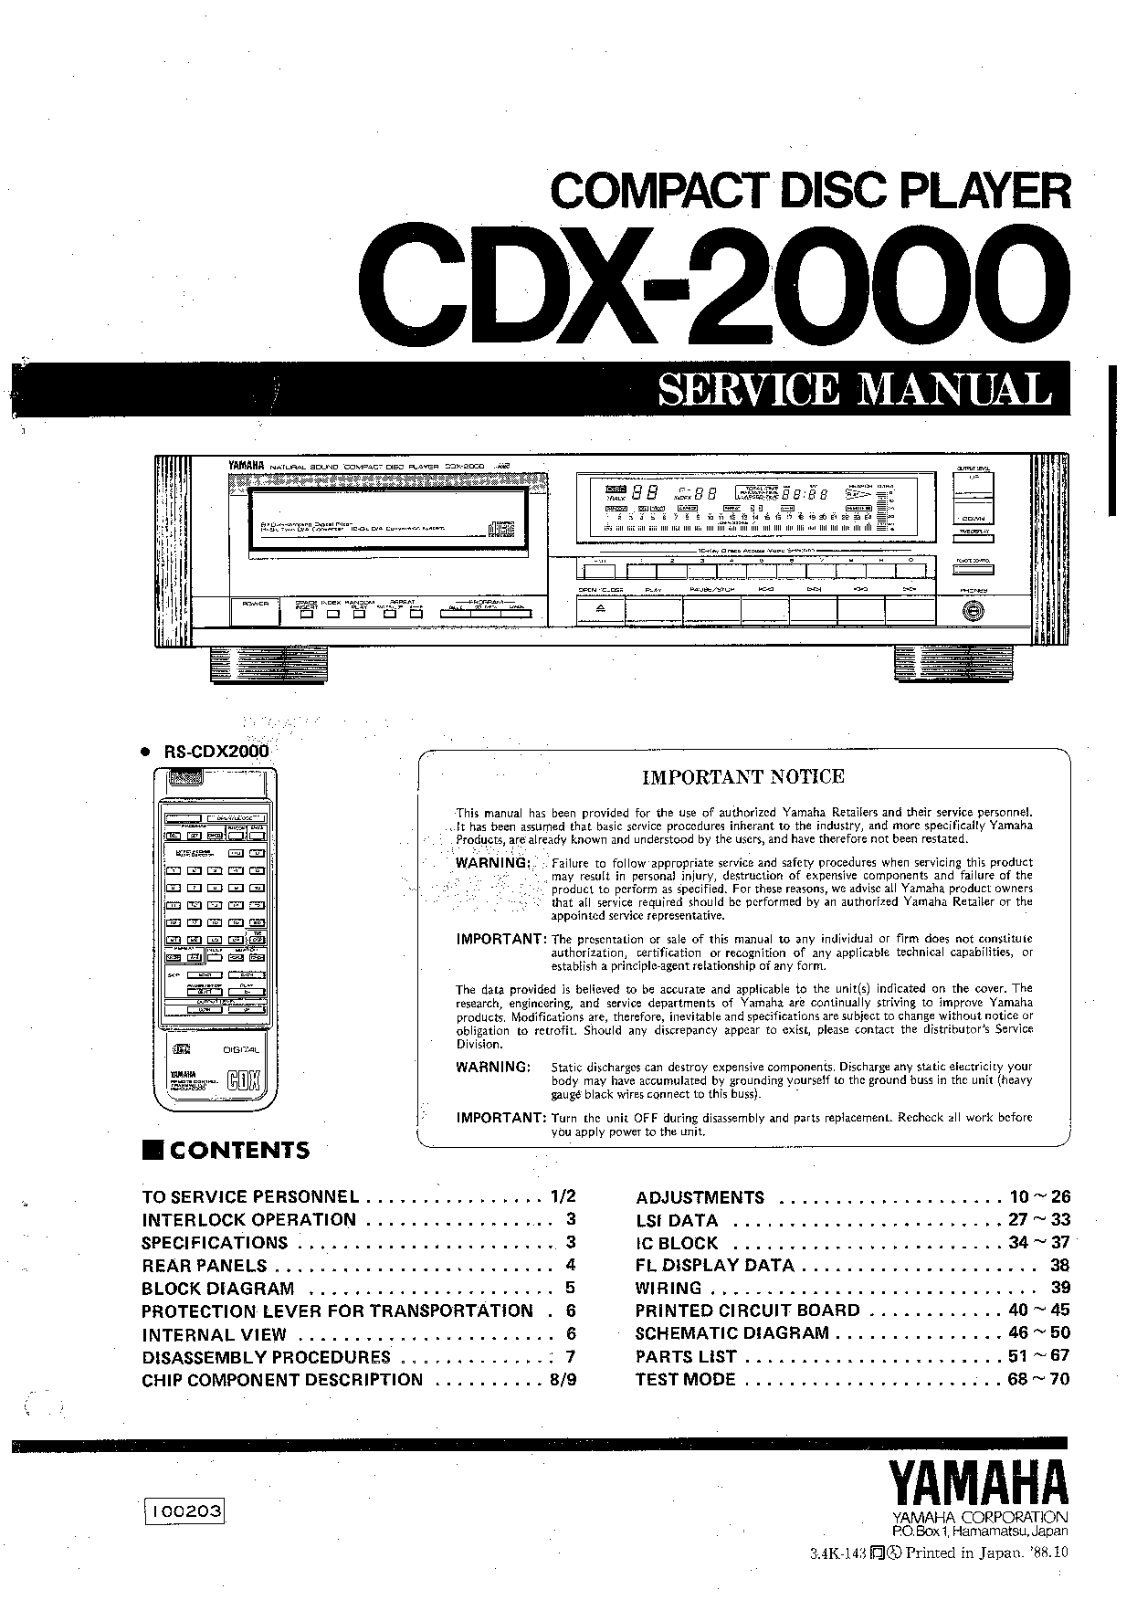 Yamaha CDX-2000 Service Manual